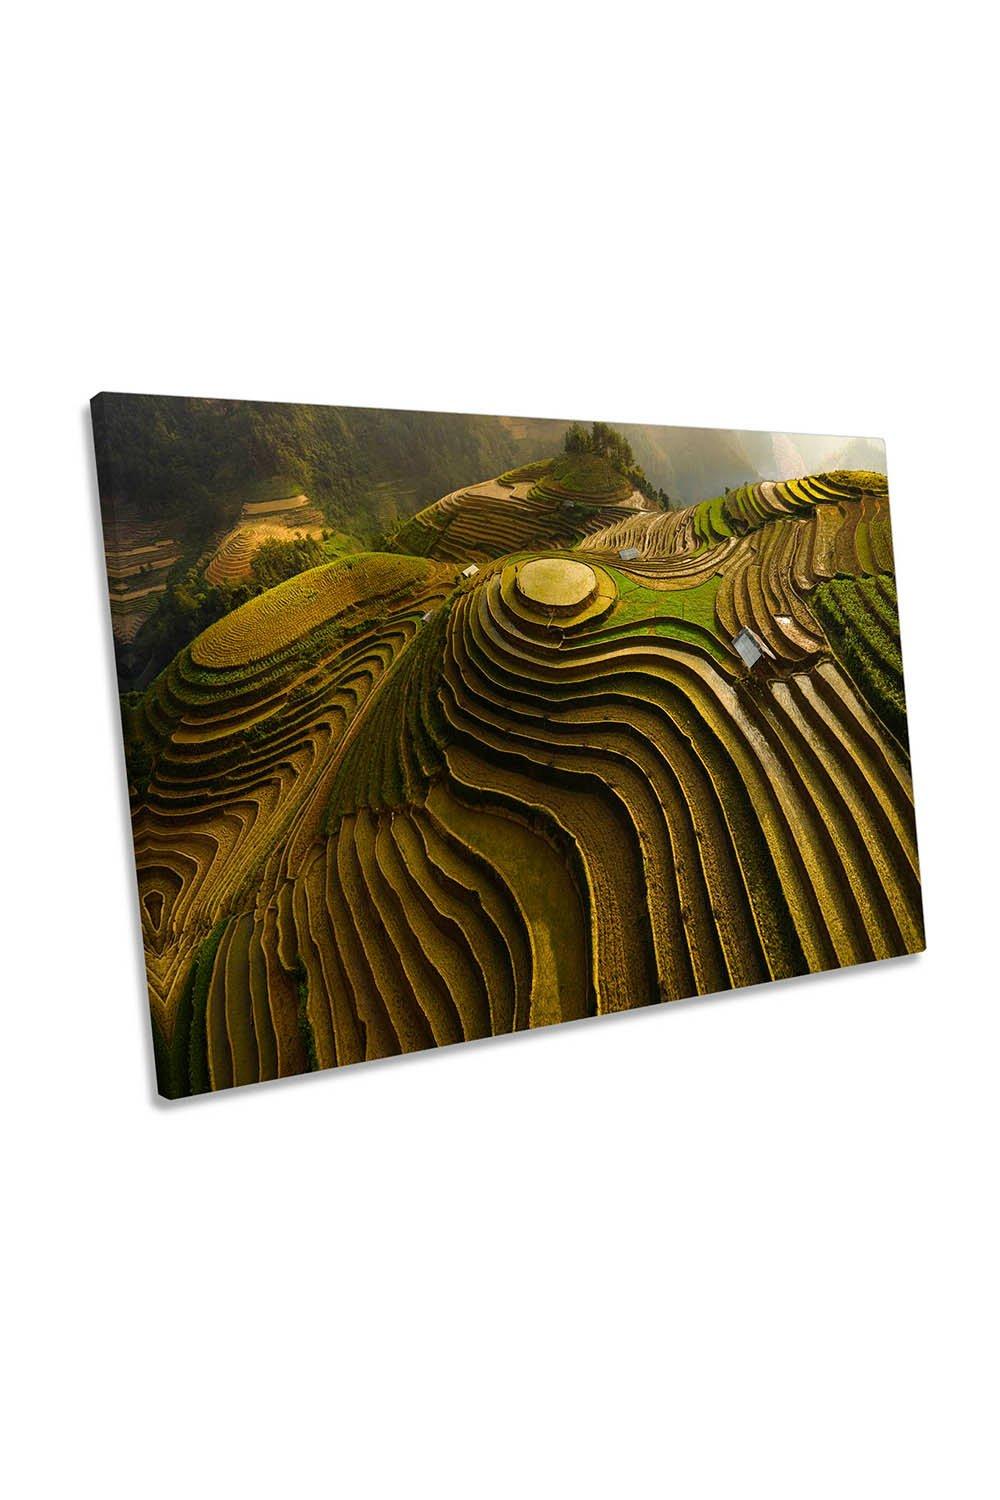 Mu Cang Chai Vietnam Rice Fields Canvas Wall Art Picture Print